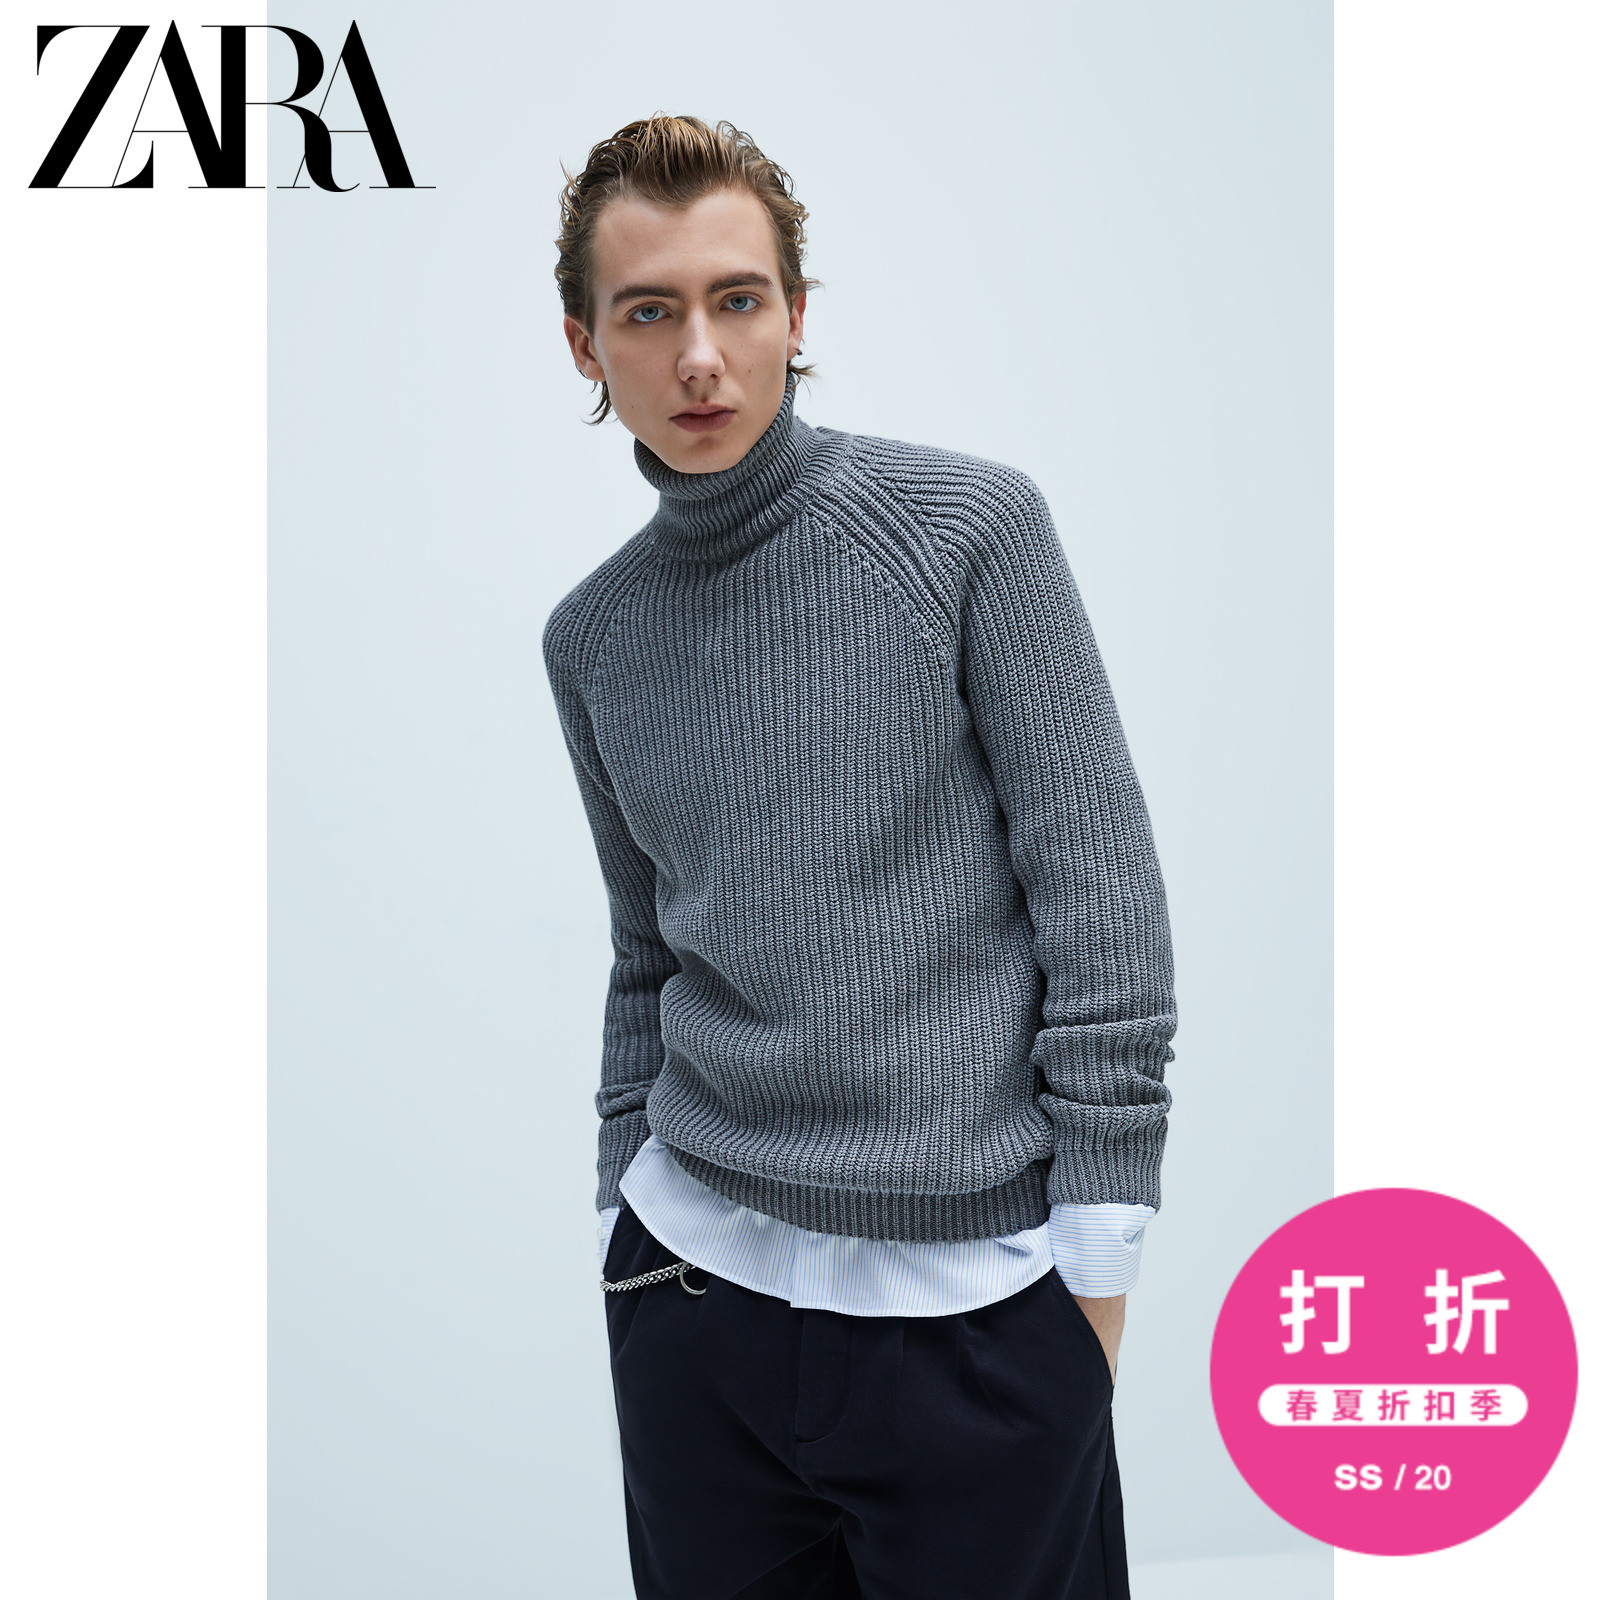 ZARA 男装 穗纹针法高领针织衫毛衣 03597400801,降价幅度80.2%